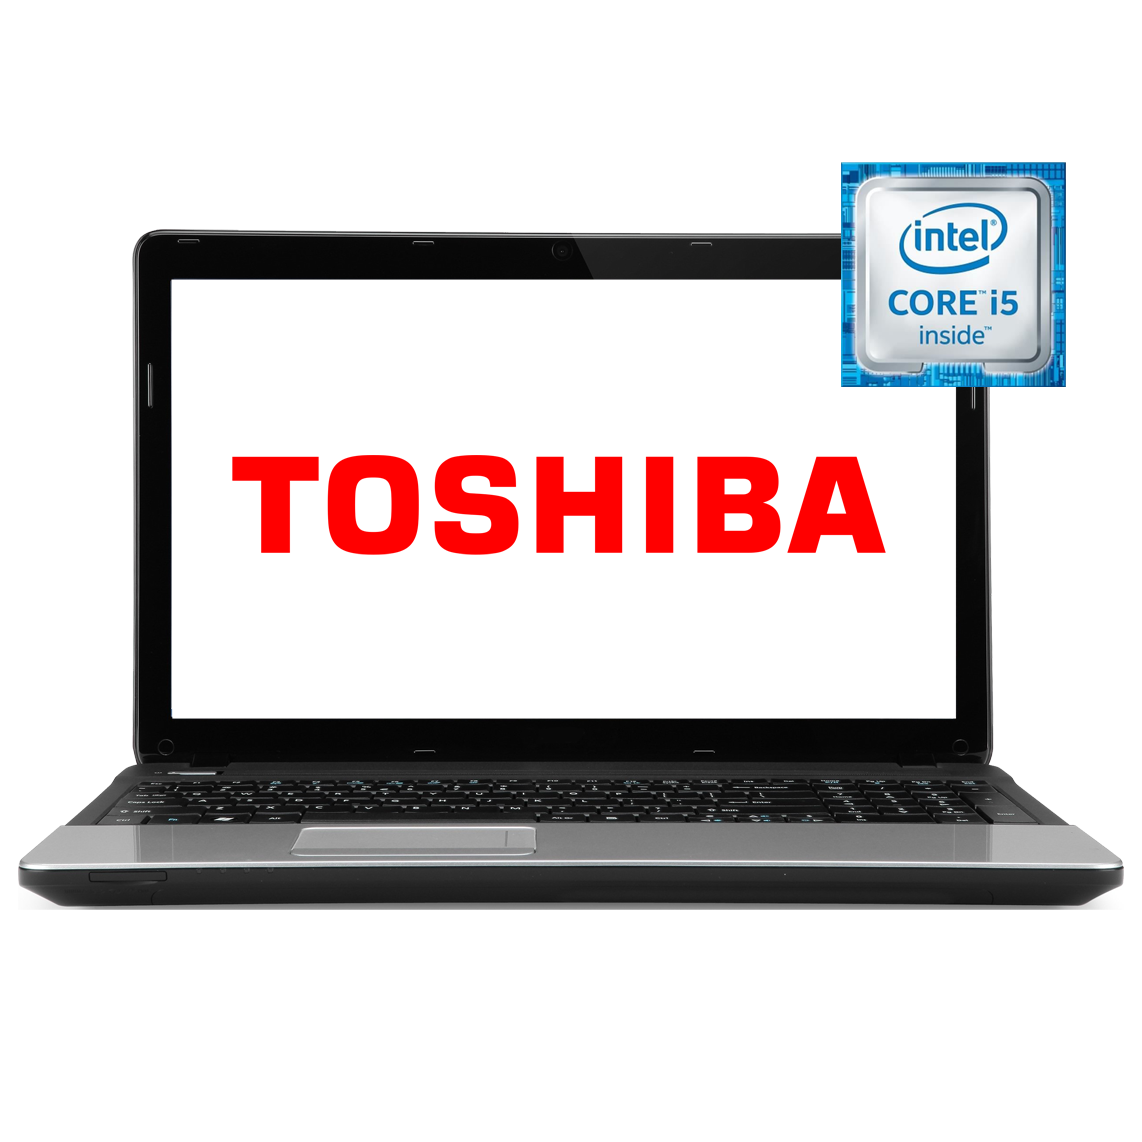 Toshiba - 17.3 inch Core i5 2nd Gen